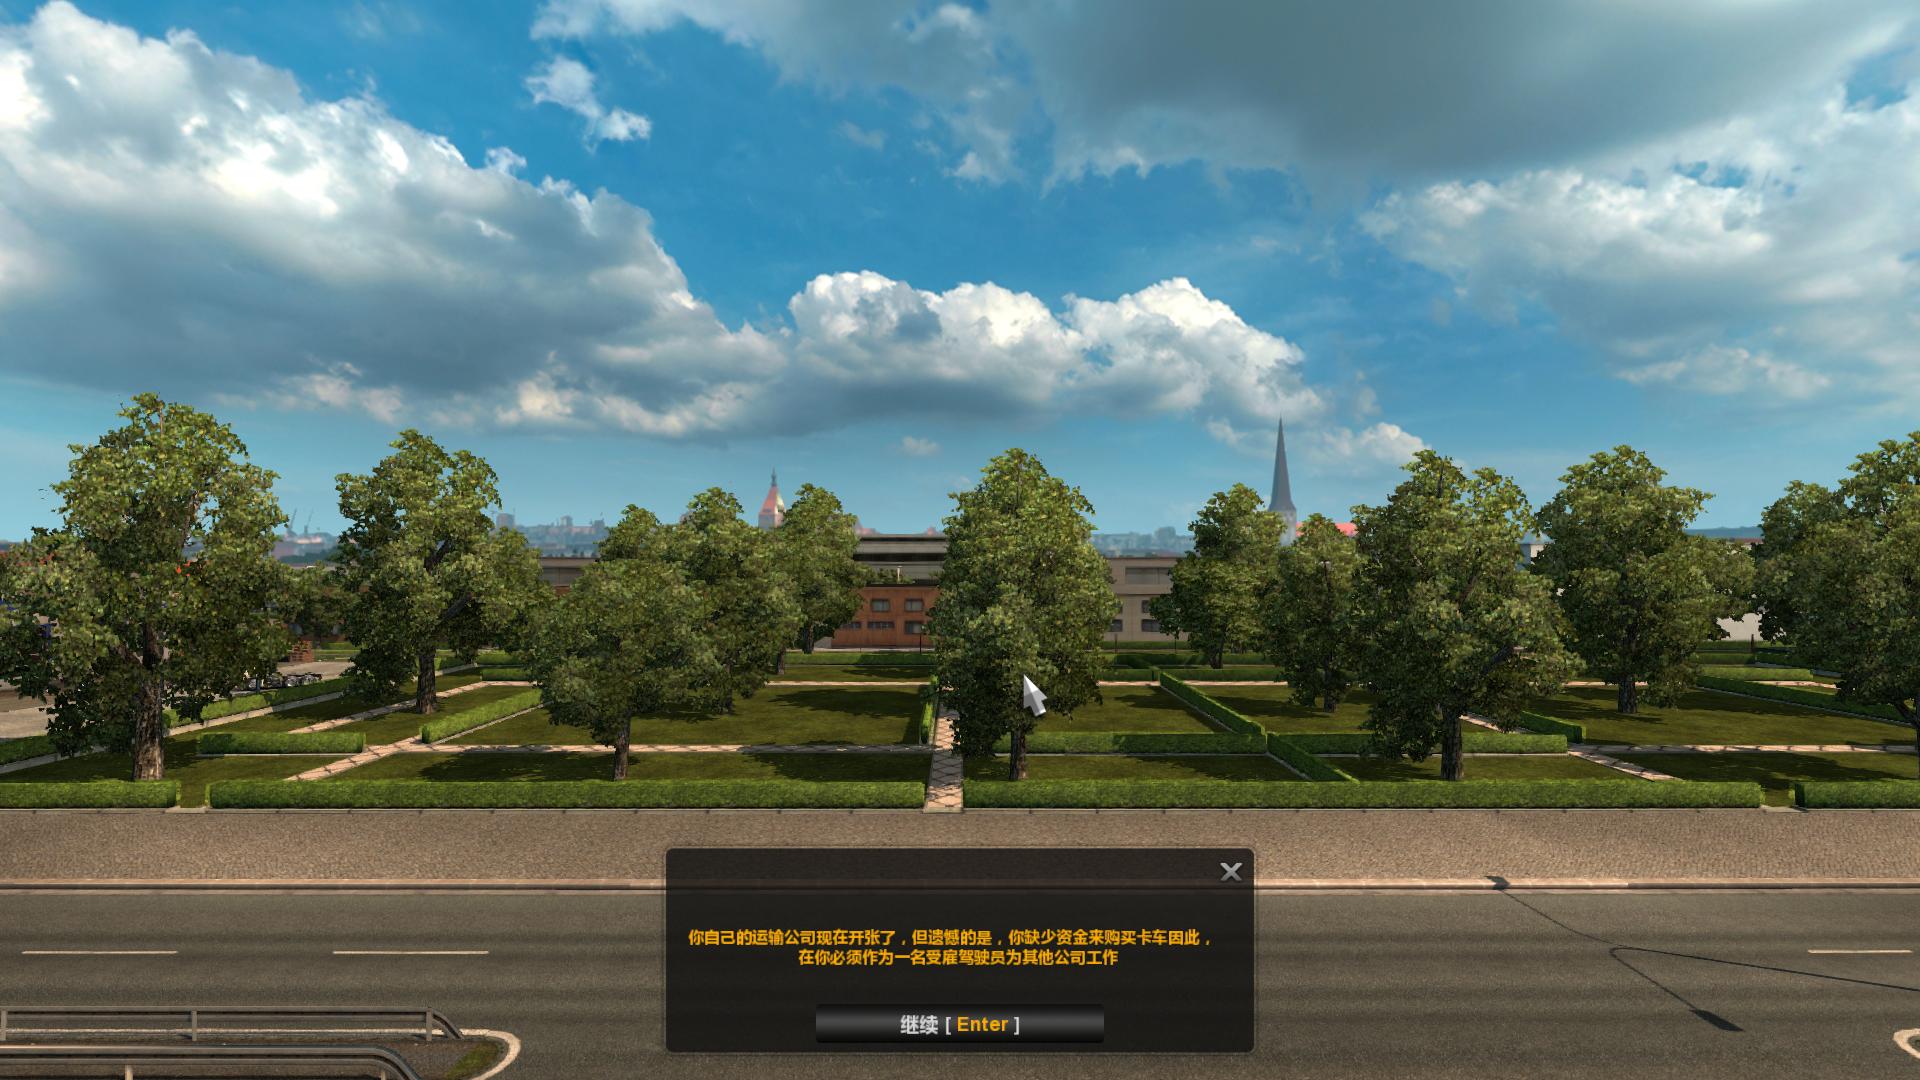 ŷ޿ģ2Euro Truck Simulator 2v1.4.12Ǯ޸PCtrainers